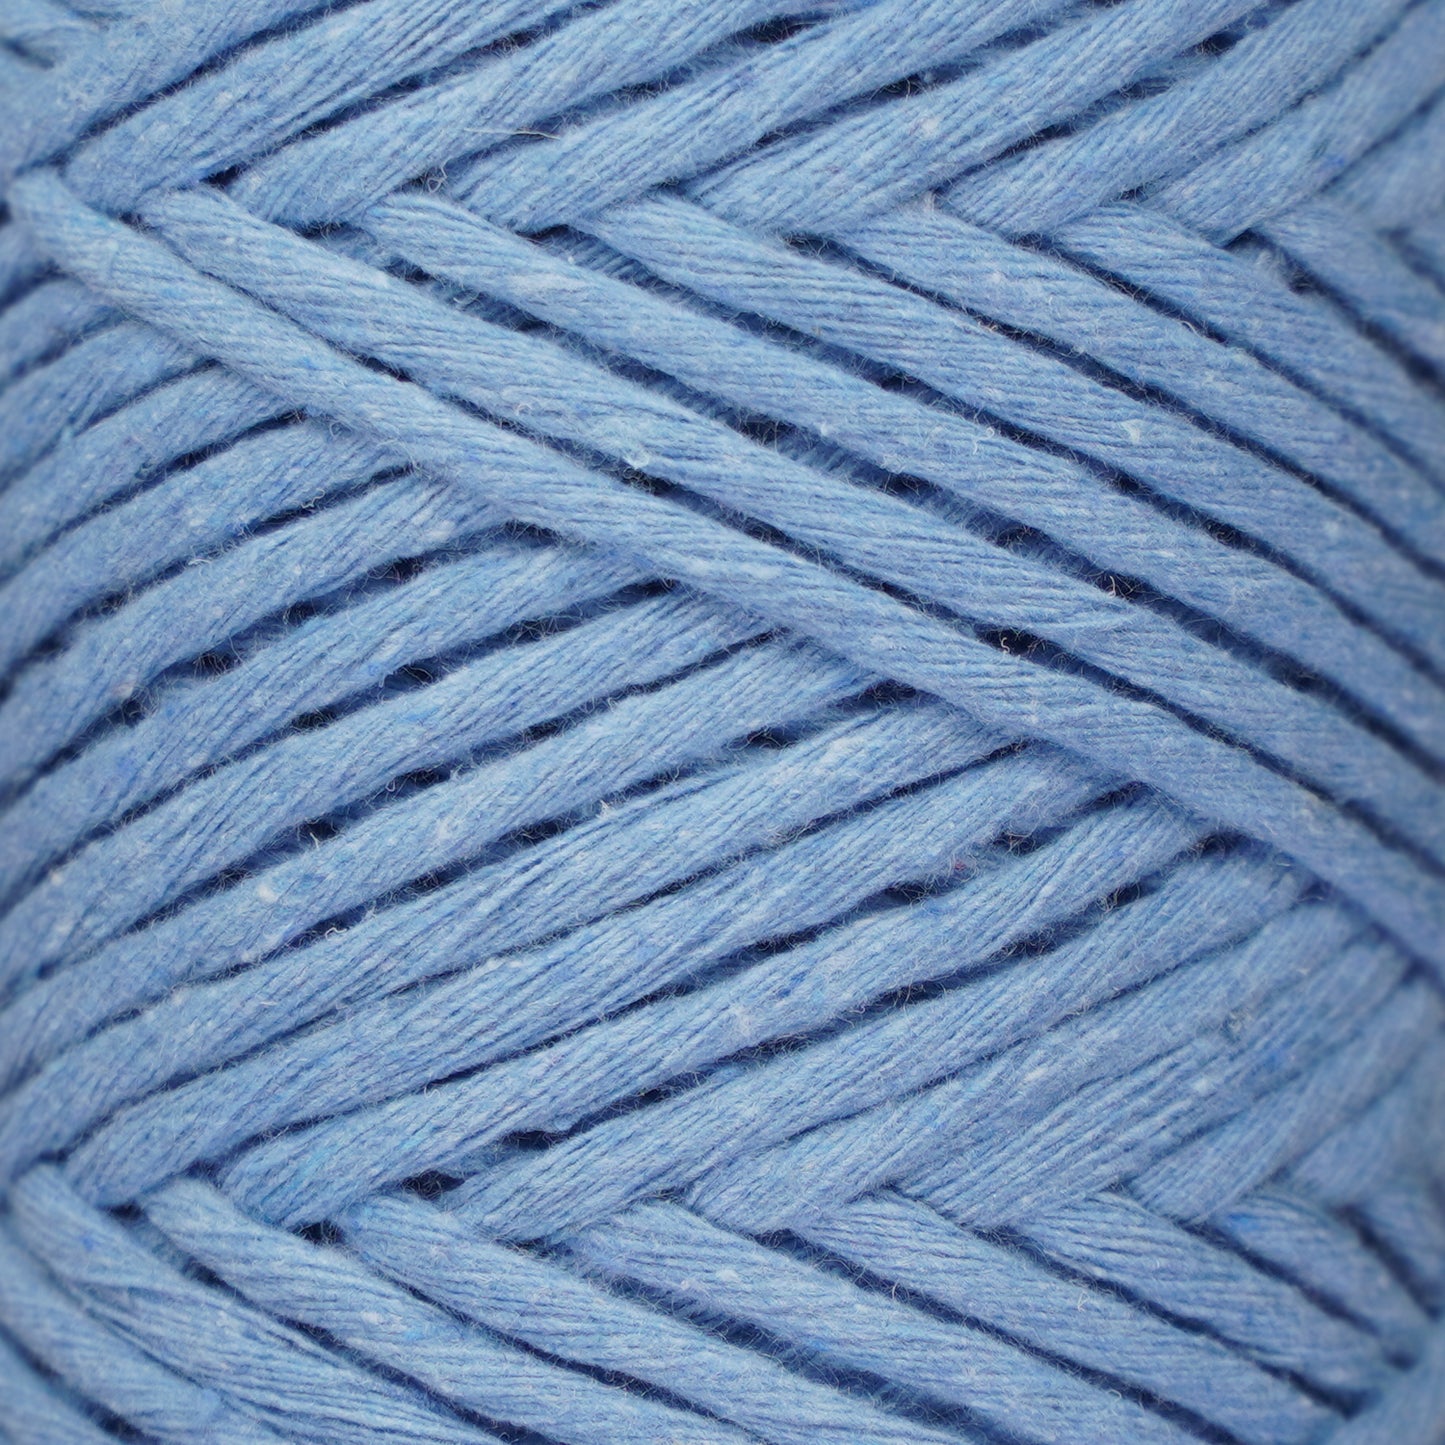 Single Strand Macrame Cord 3 mm x 109 Yards (328 feet) - Baby Blue